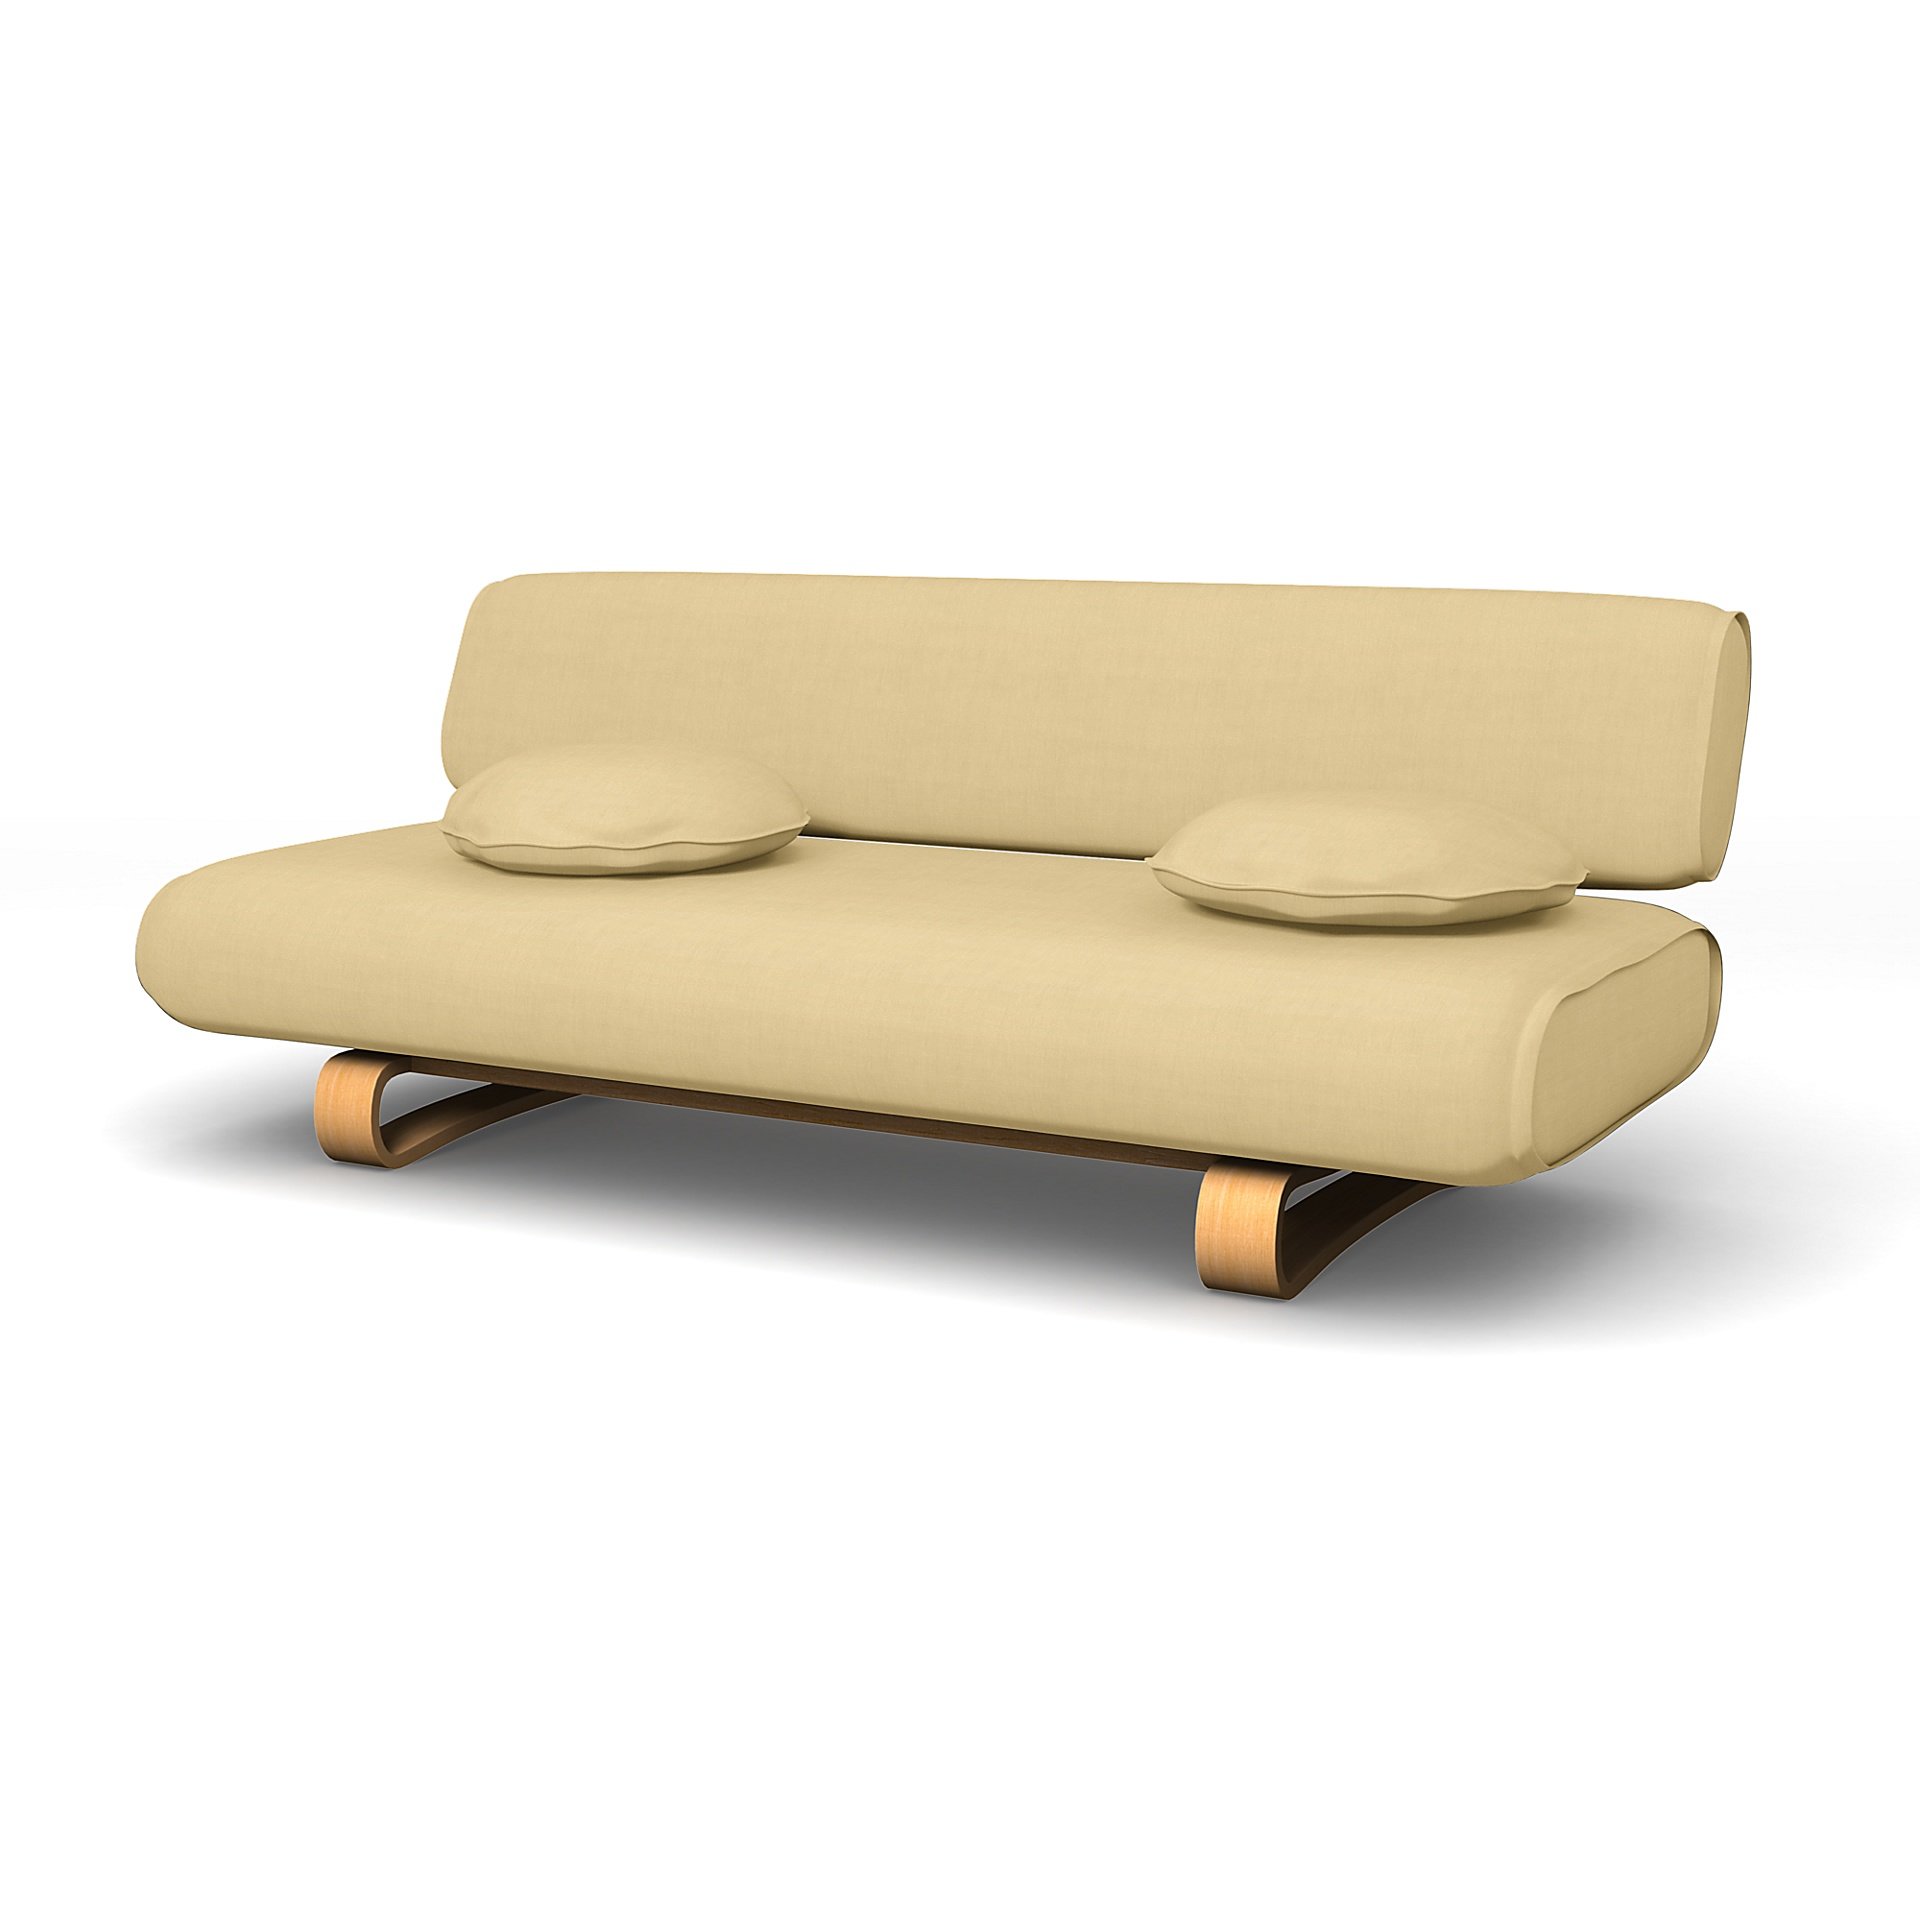 IKEA - Allerum Sofa Bed Cover, Straw Yellow, Linen - Bemz